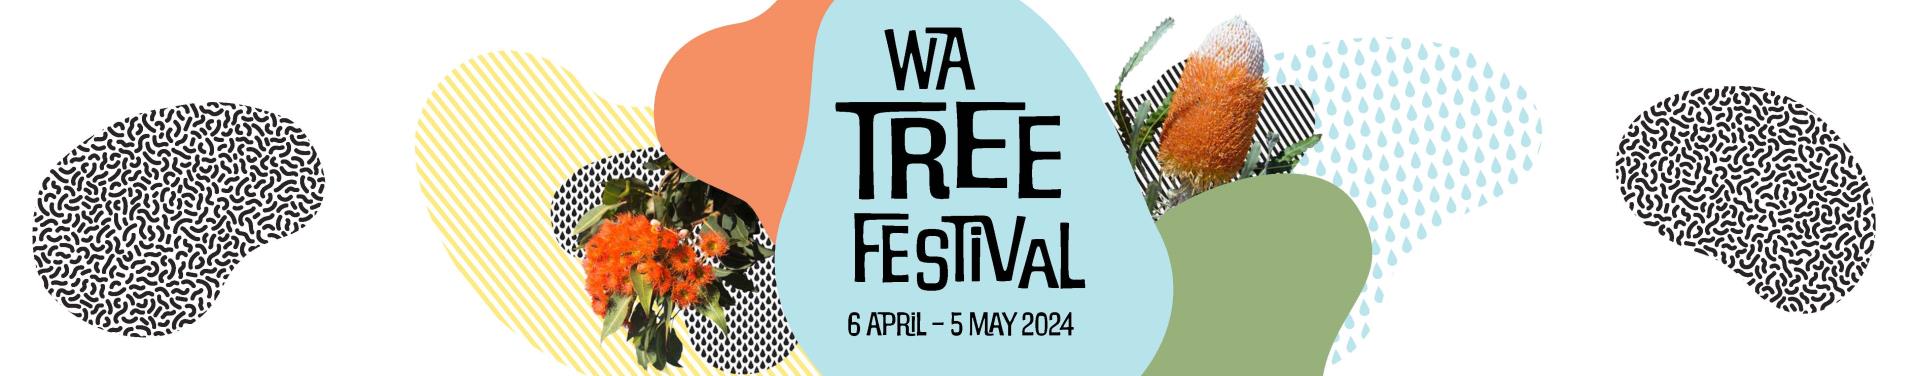 WA Tree Festival logo 2024